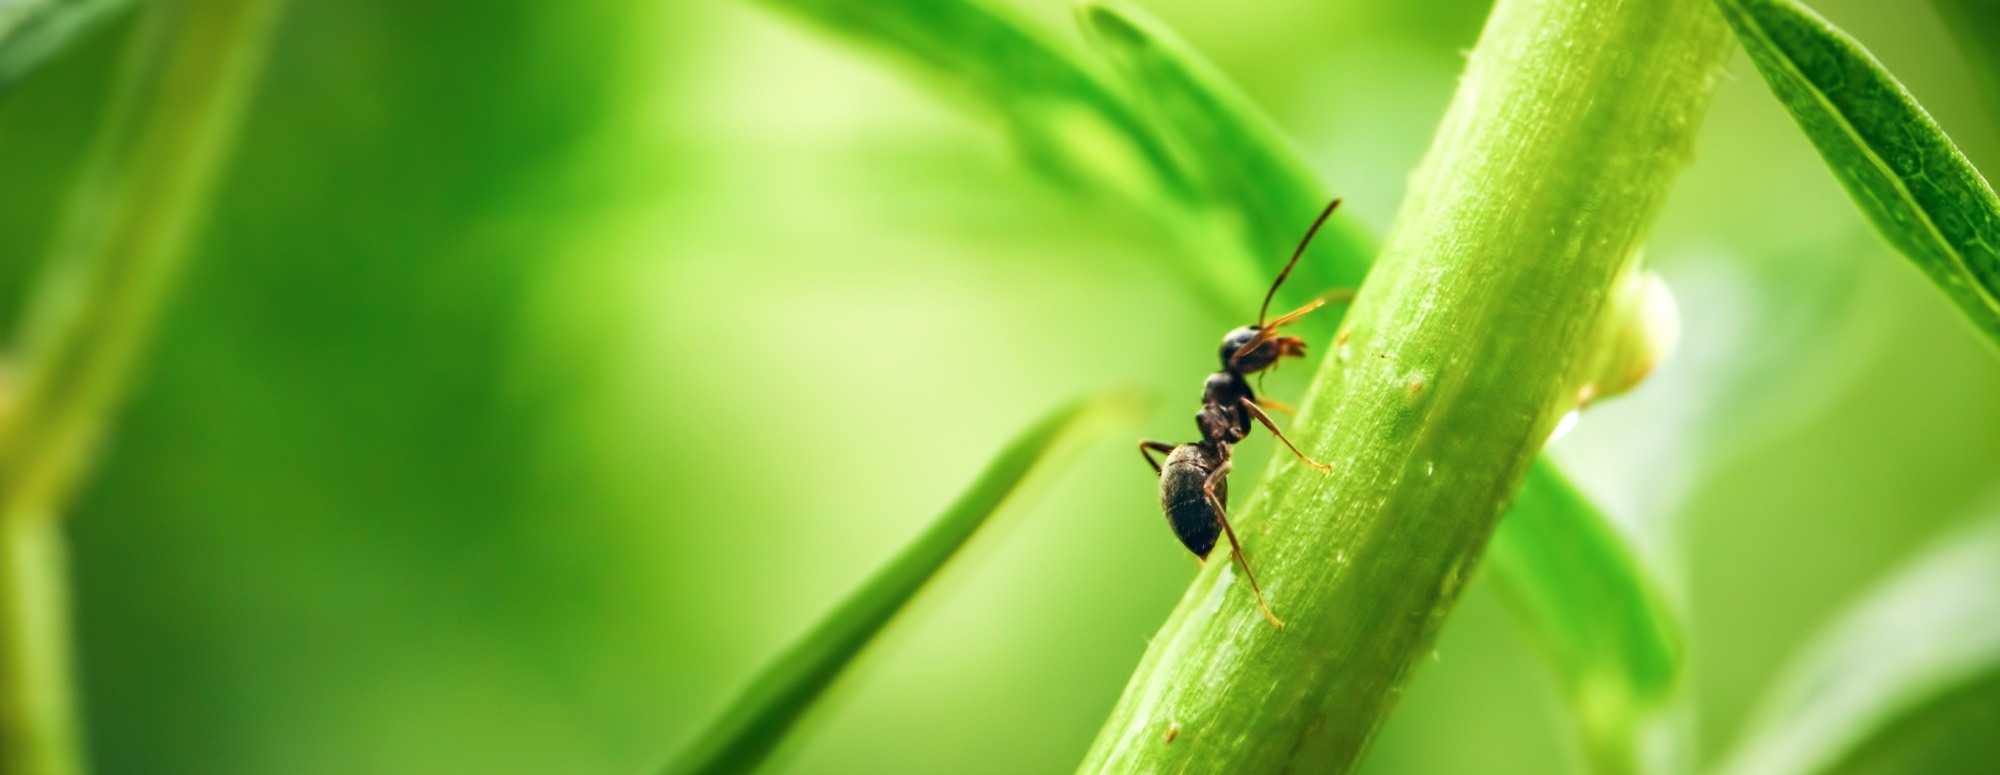 ant walking on green plant stem